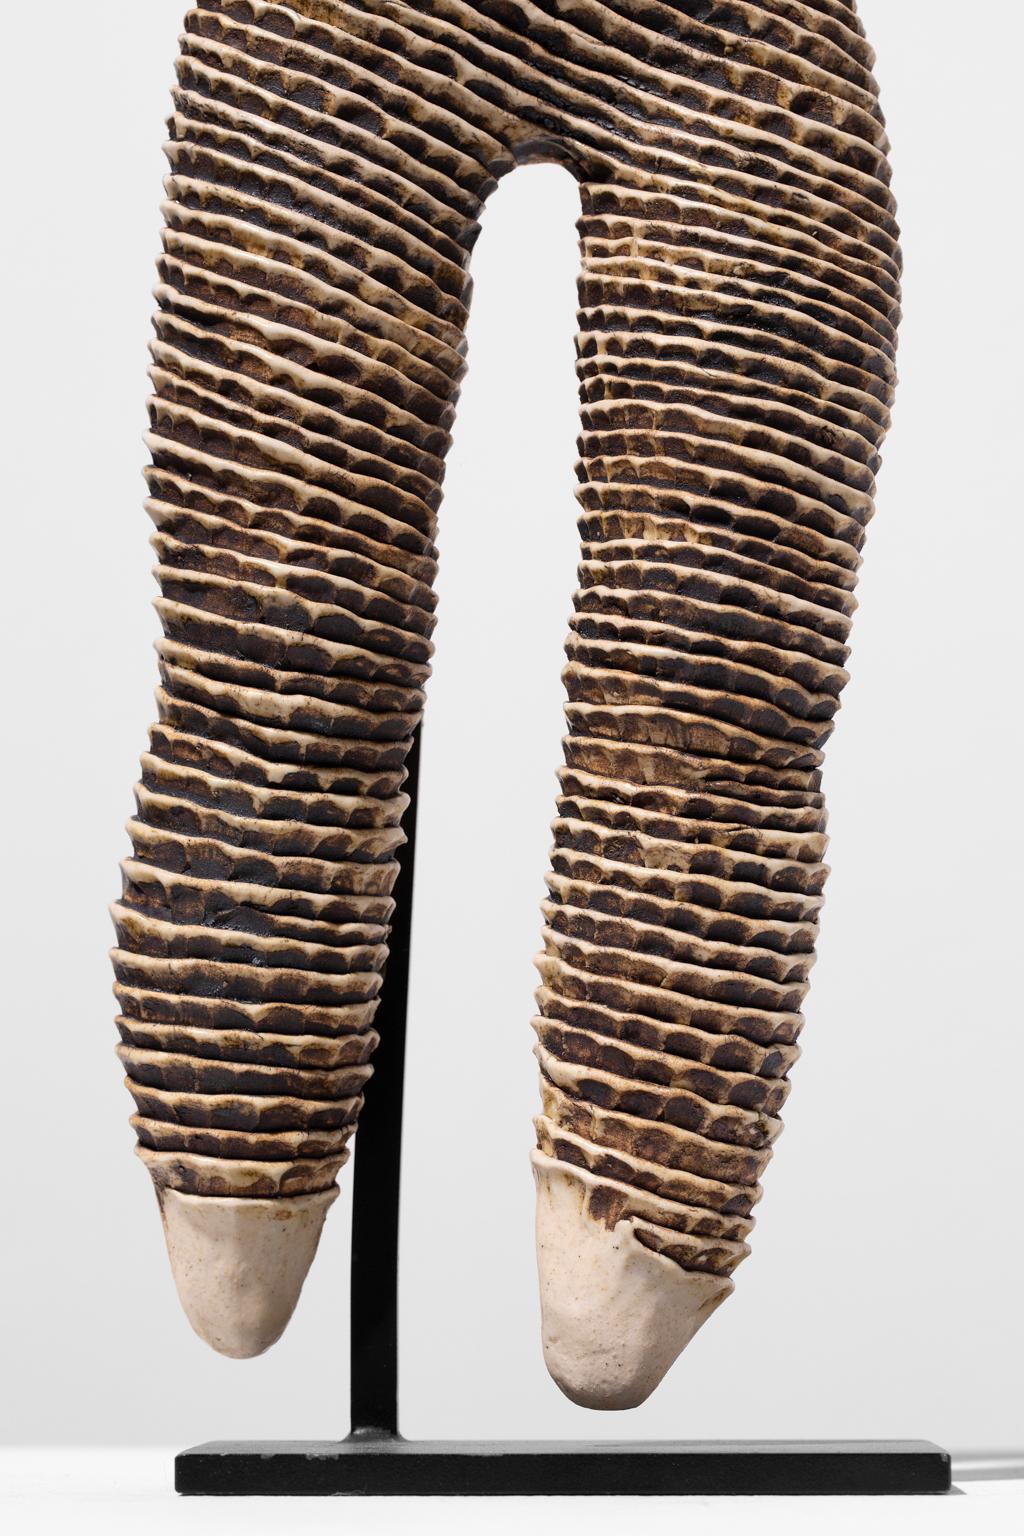 Michele Oka Doner Stoneware Figurines Female Torso w/Legs Phallic Shaped Spear 9